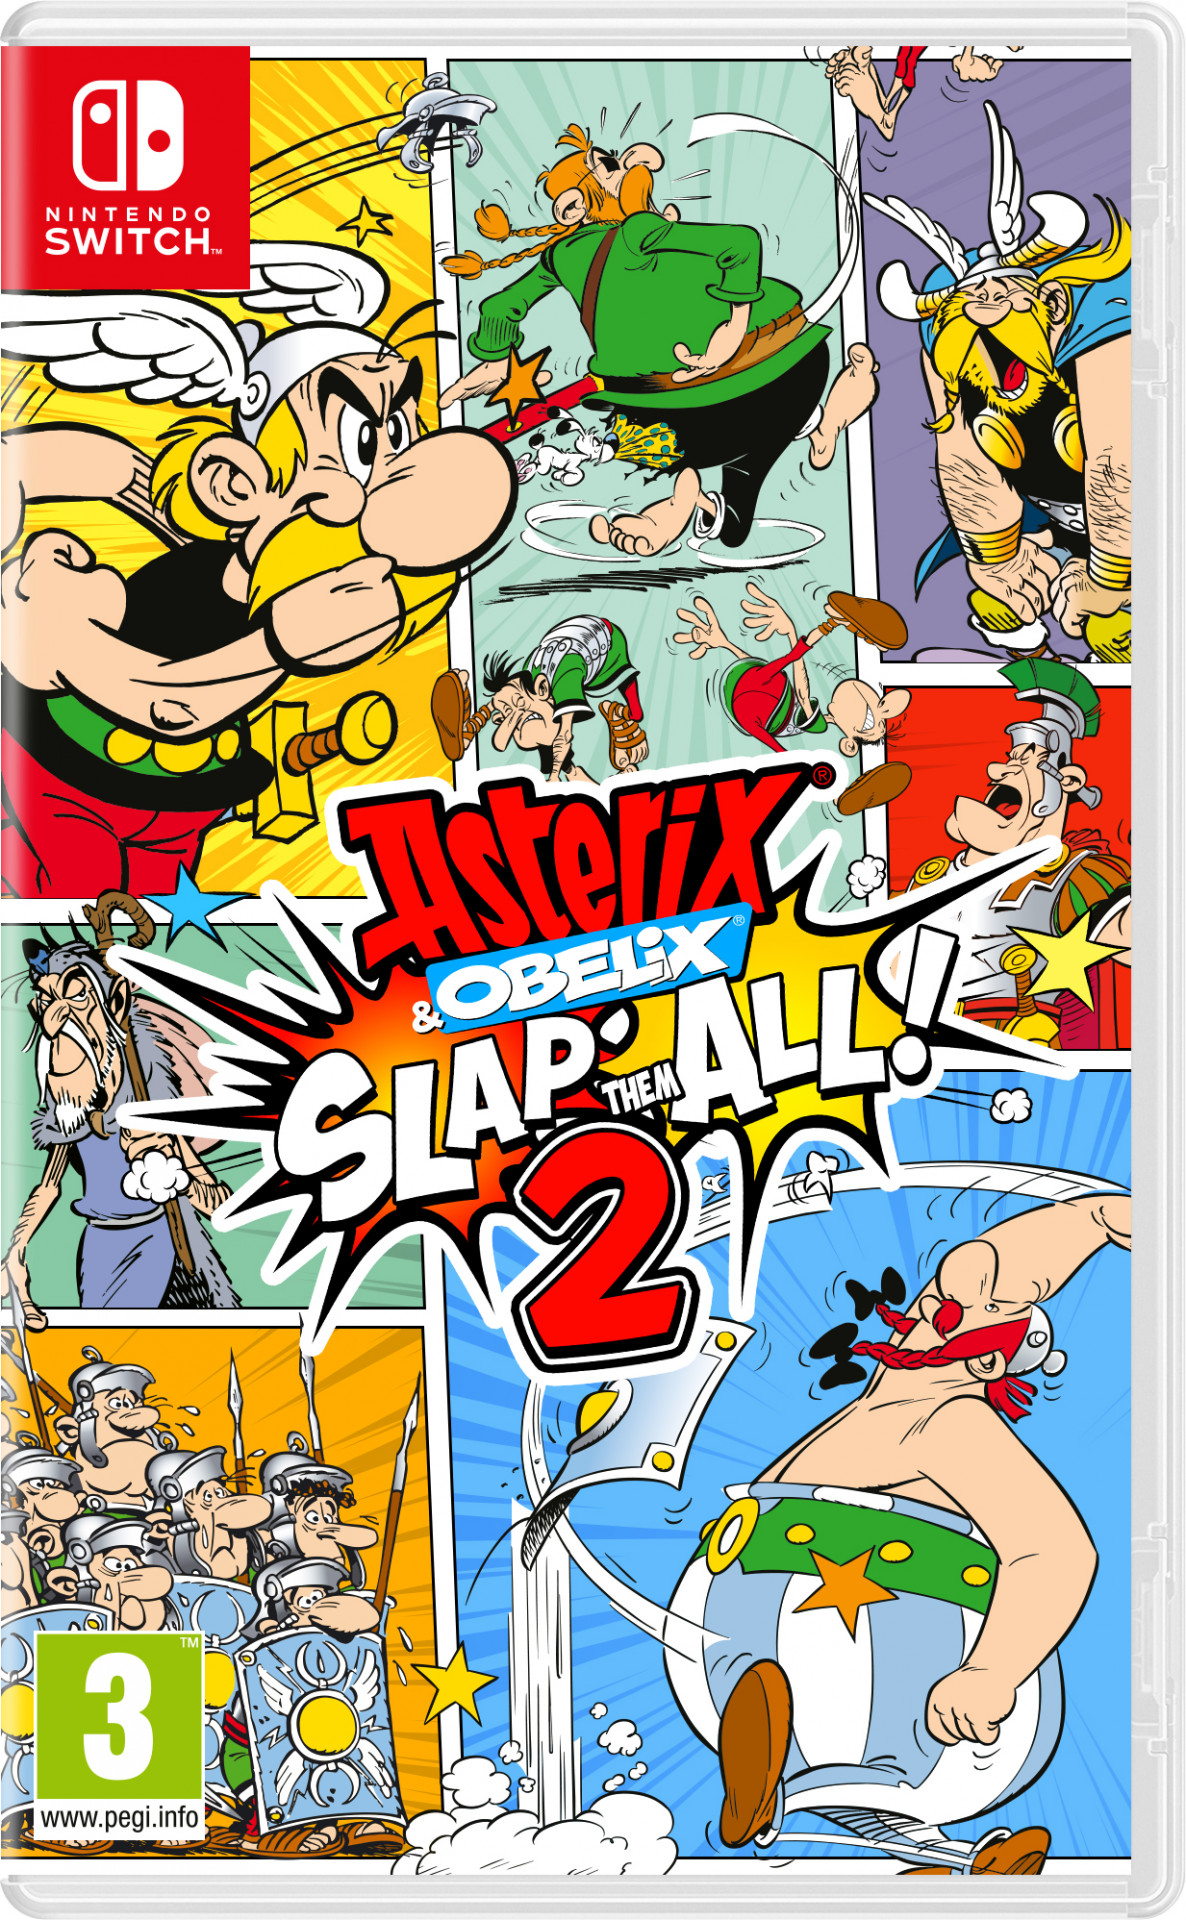 Asterix & Obelix Slap Them All! 2 - Nintendo Switch